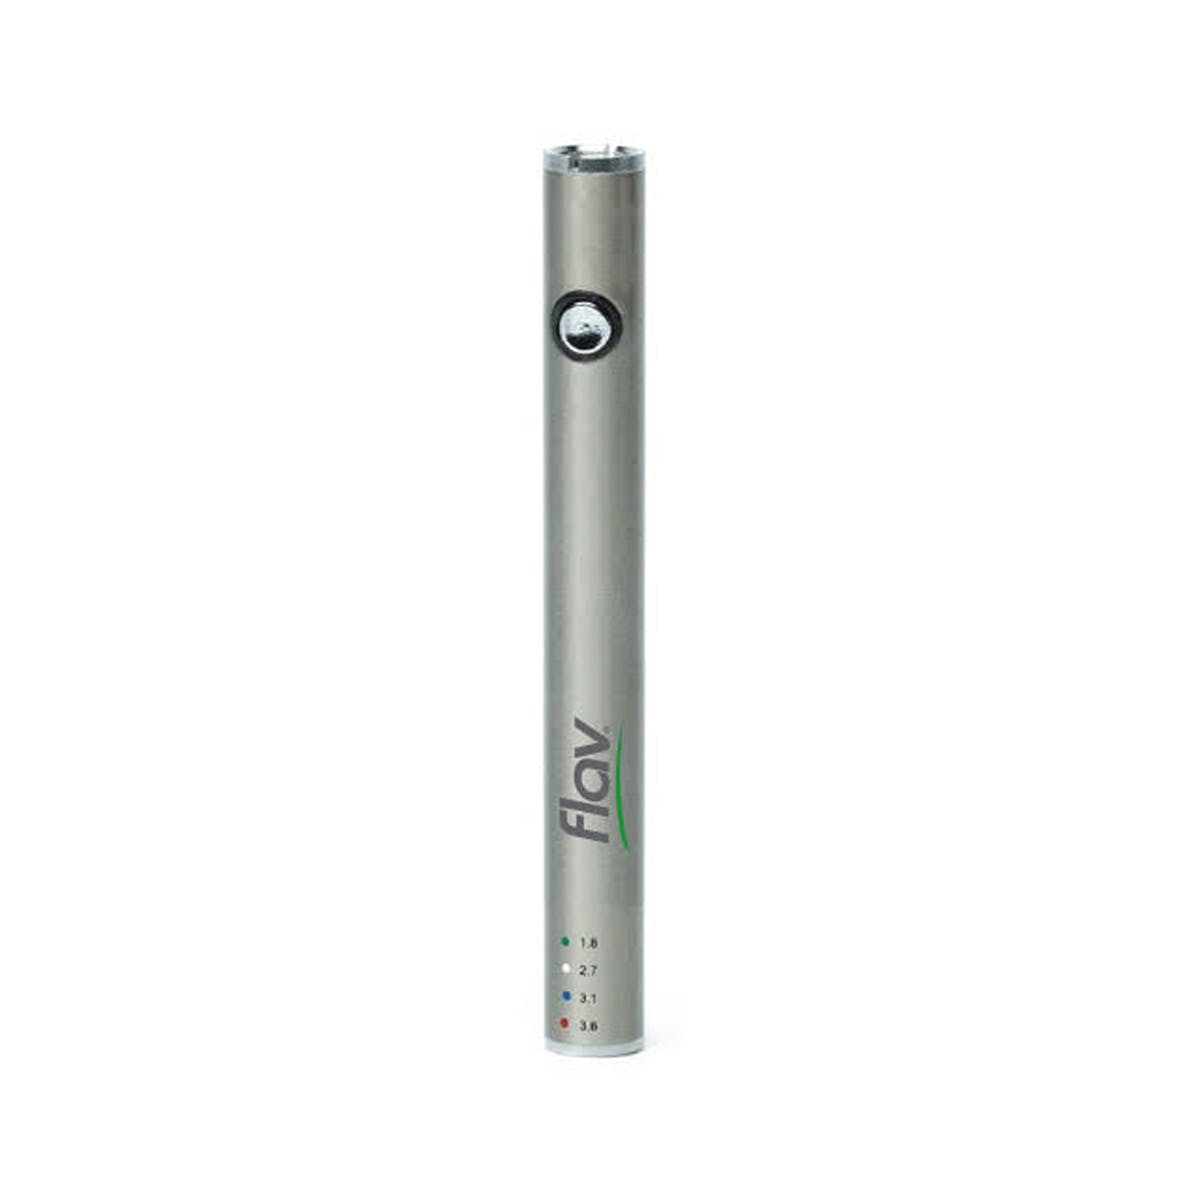 Flav Adjustable Temperature Silver Battery